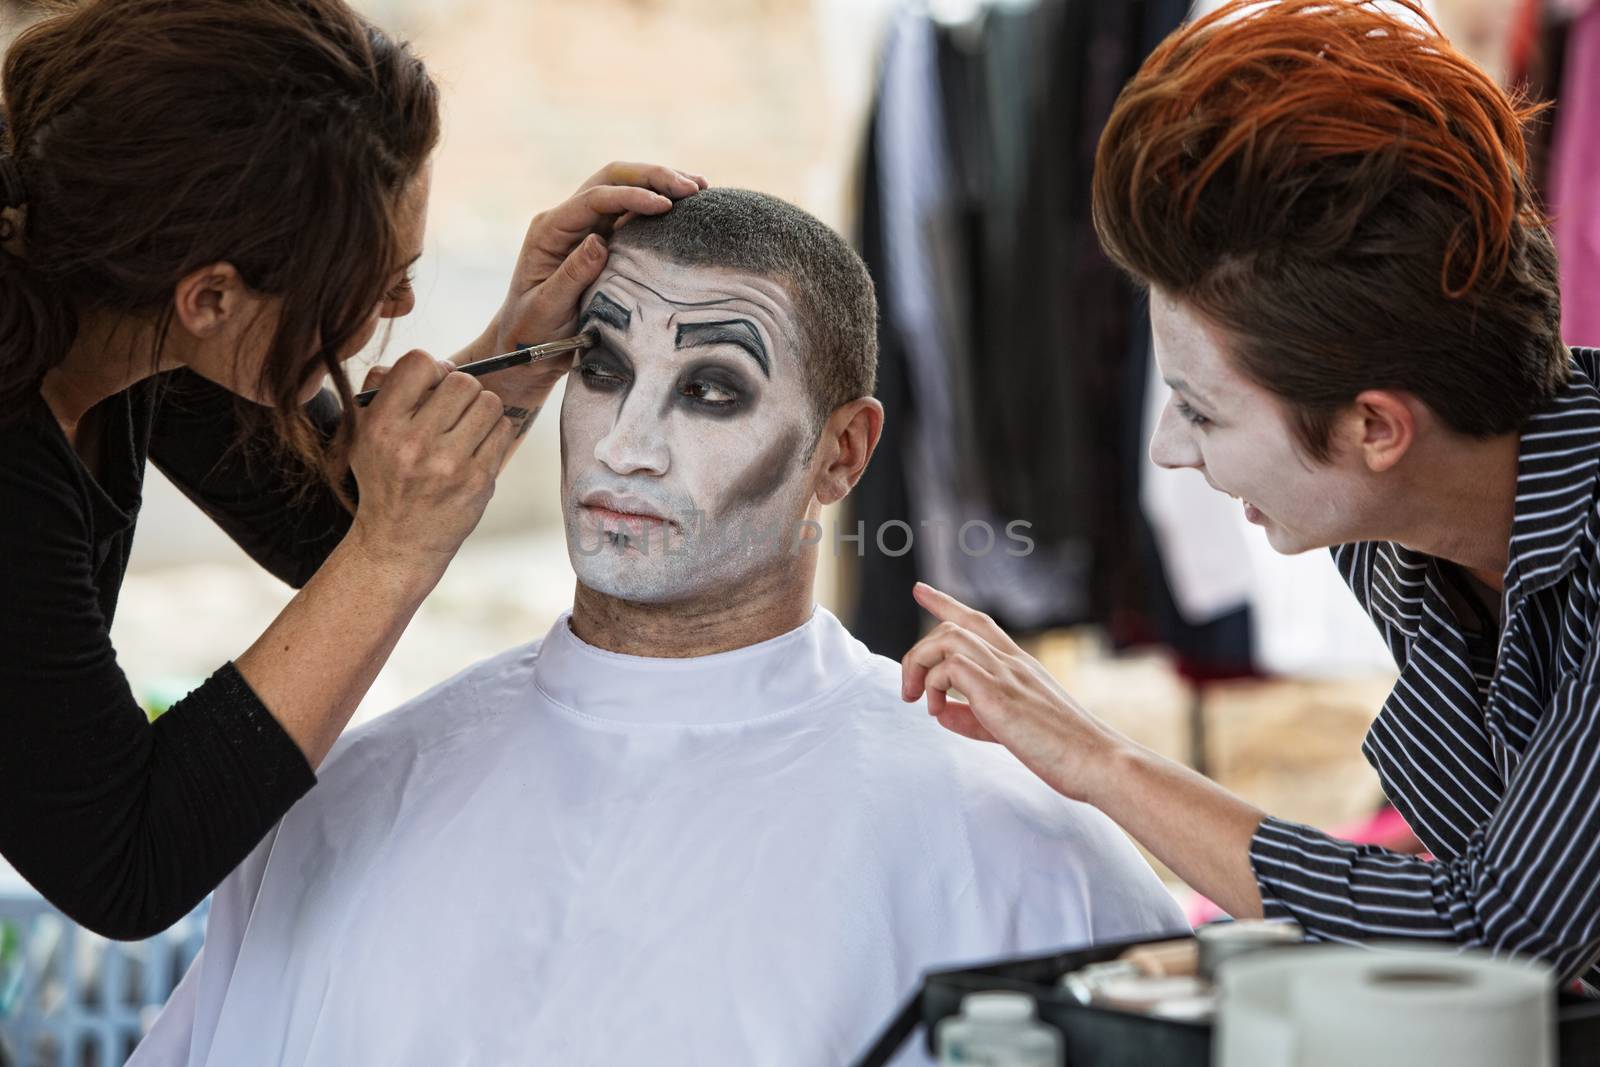 Cirque Clowns Backstage Makeup by Creatista